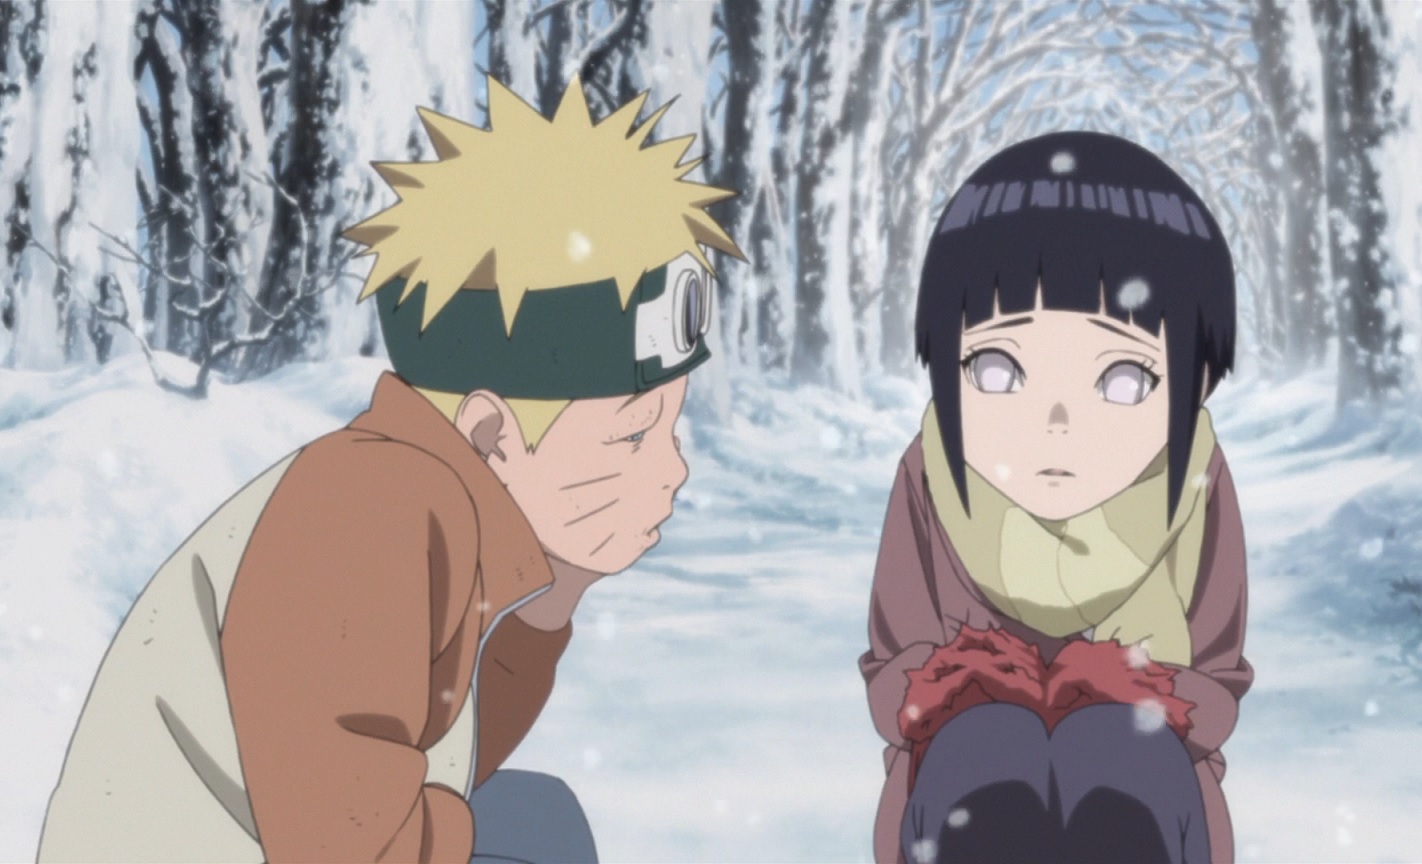 Afinal, com quem o Naruto se casa ao final de Shippuden: Hinata ou Sakura?